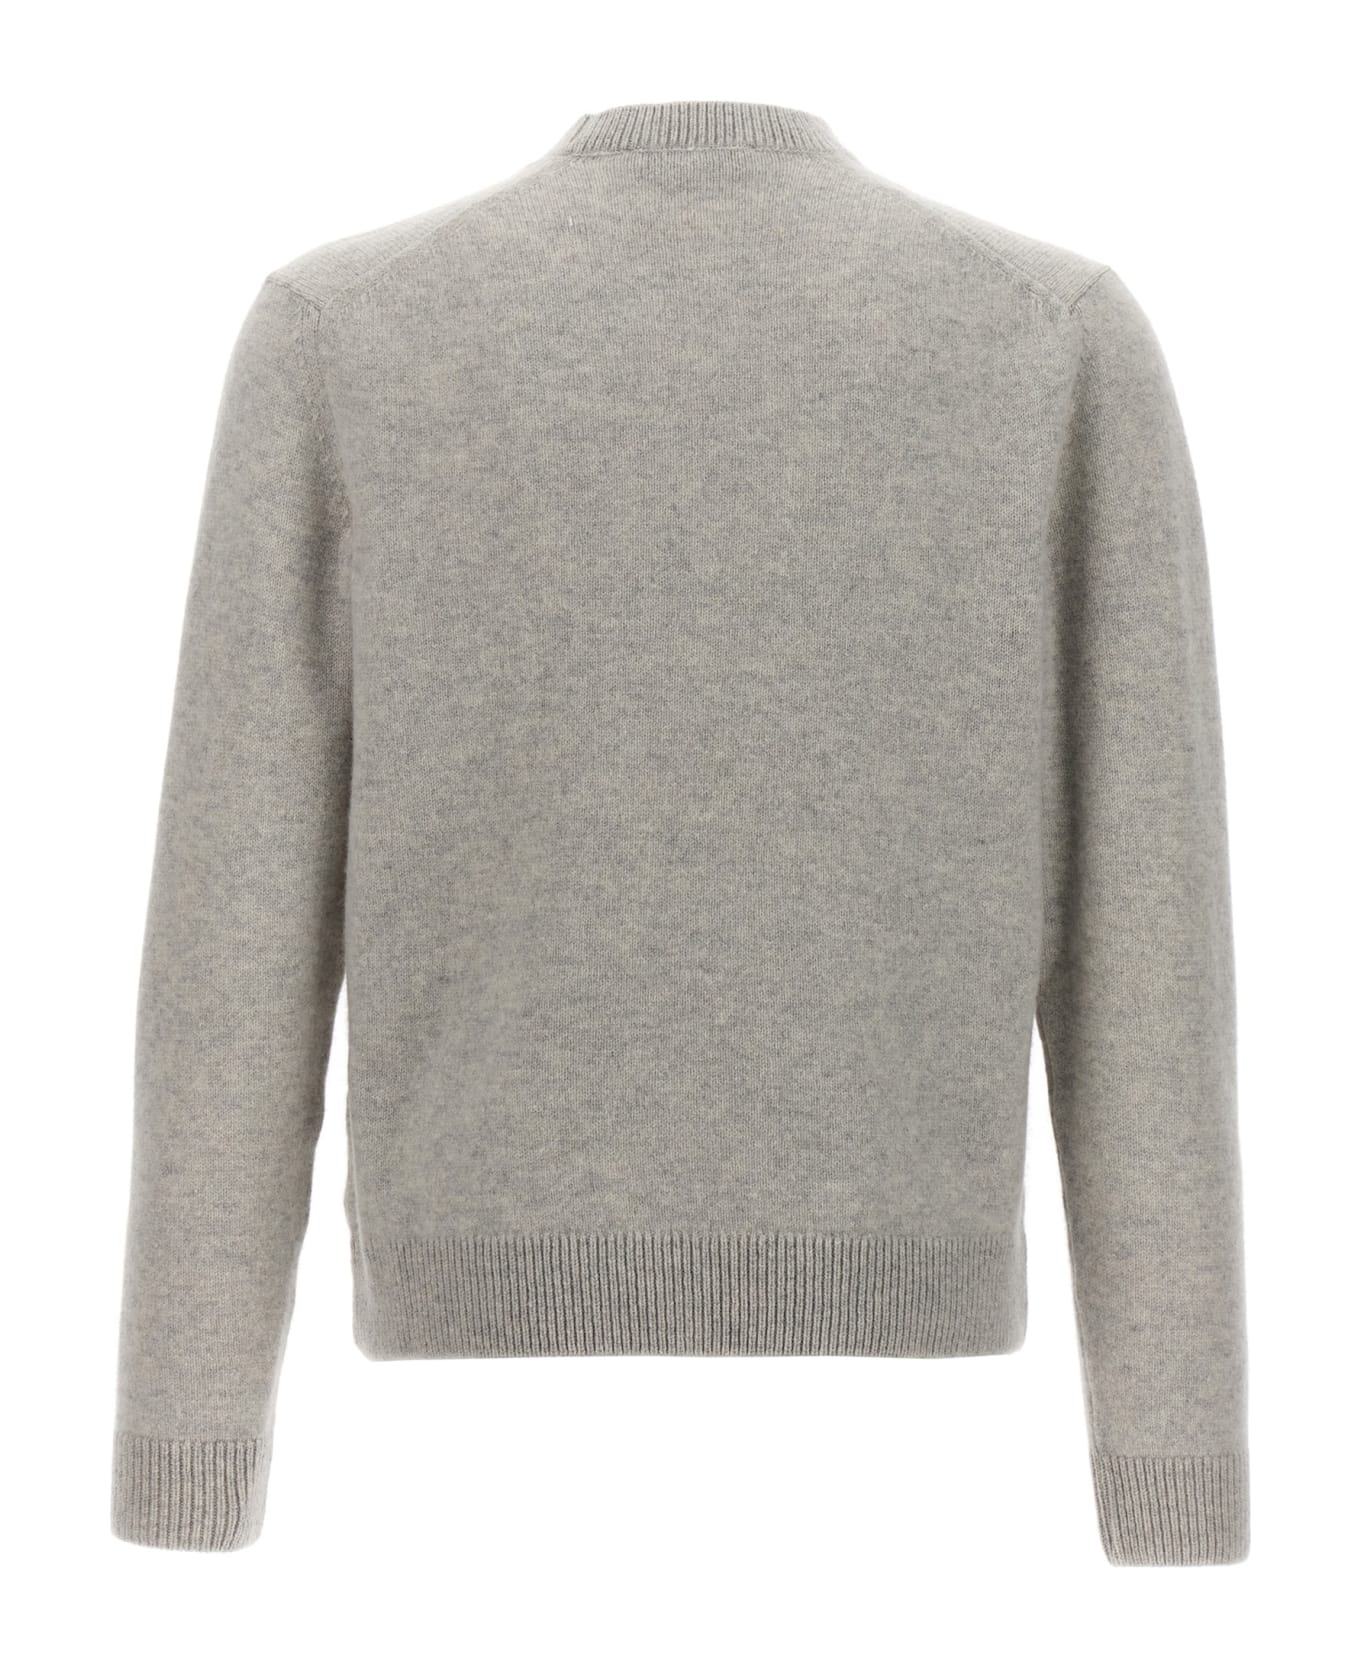 Maison Kitsuné 'baby Fox' Sweater - Light Grey Melange